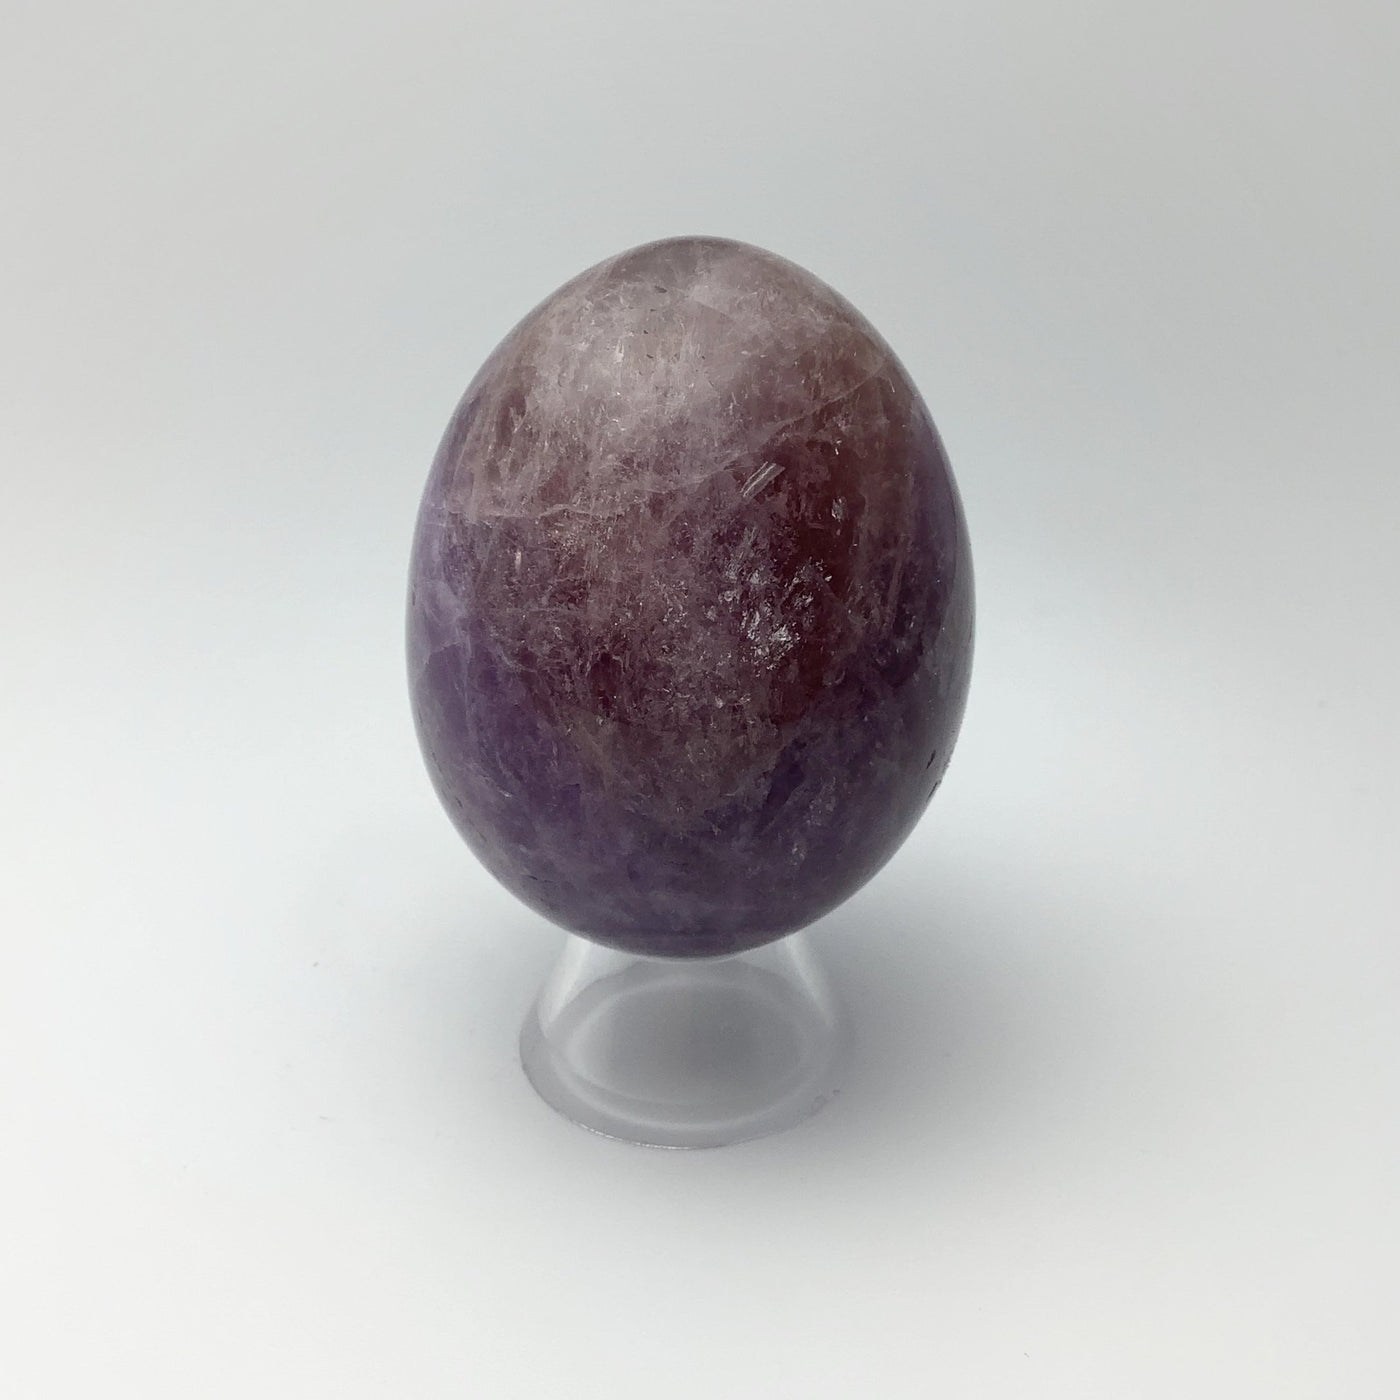 Amethyst Egg